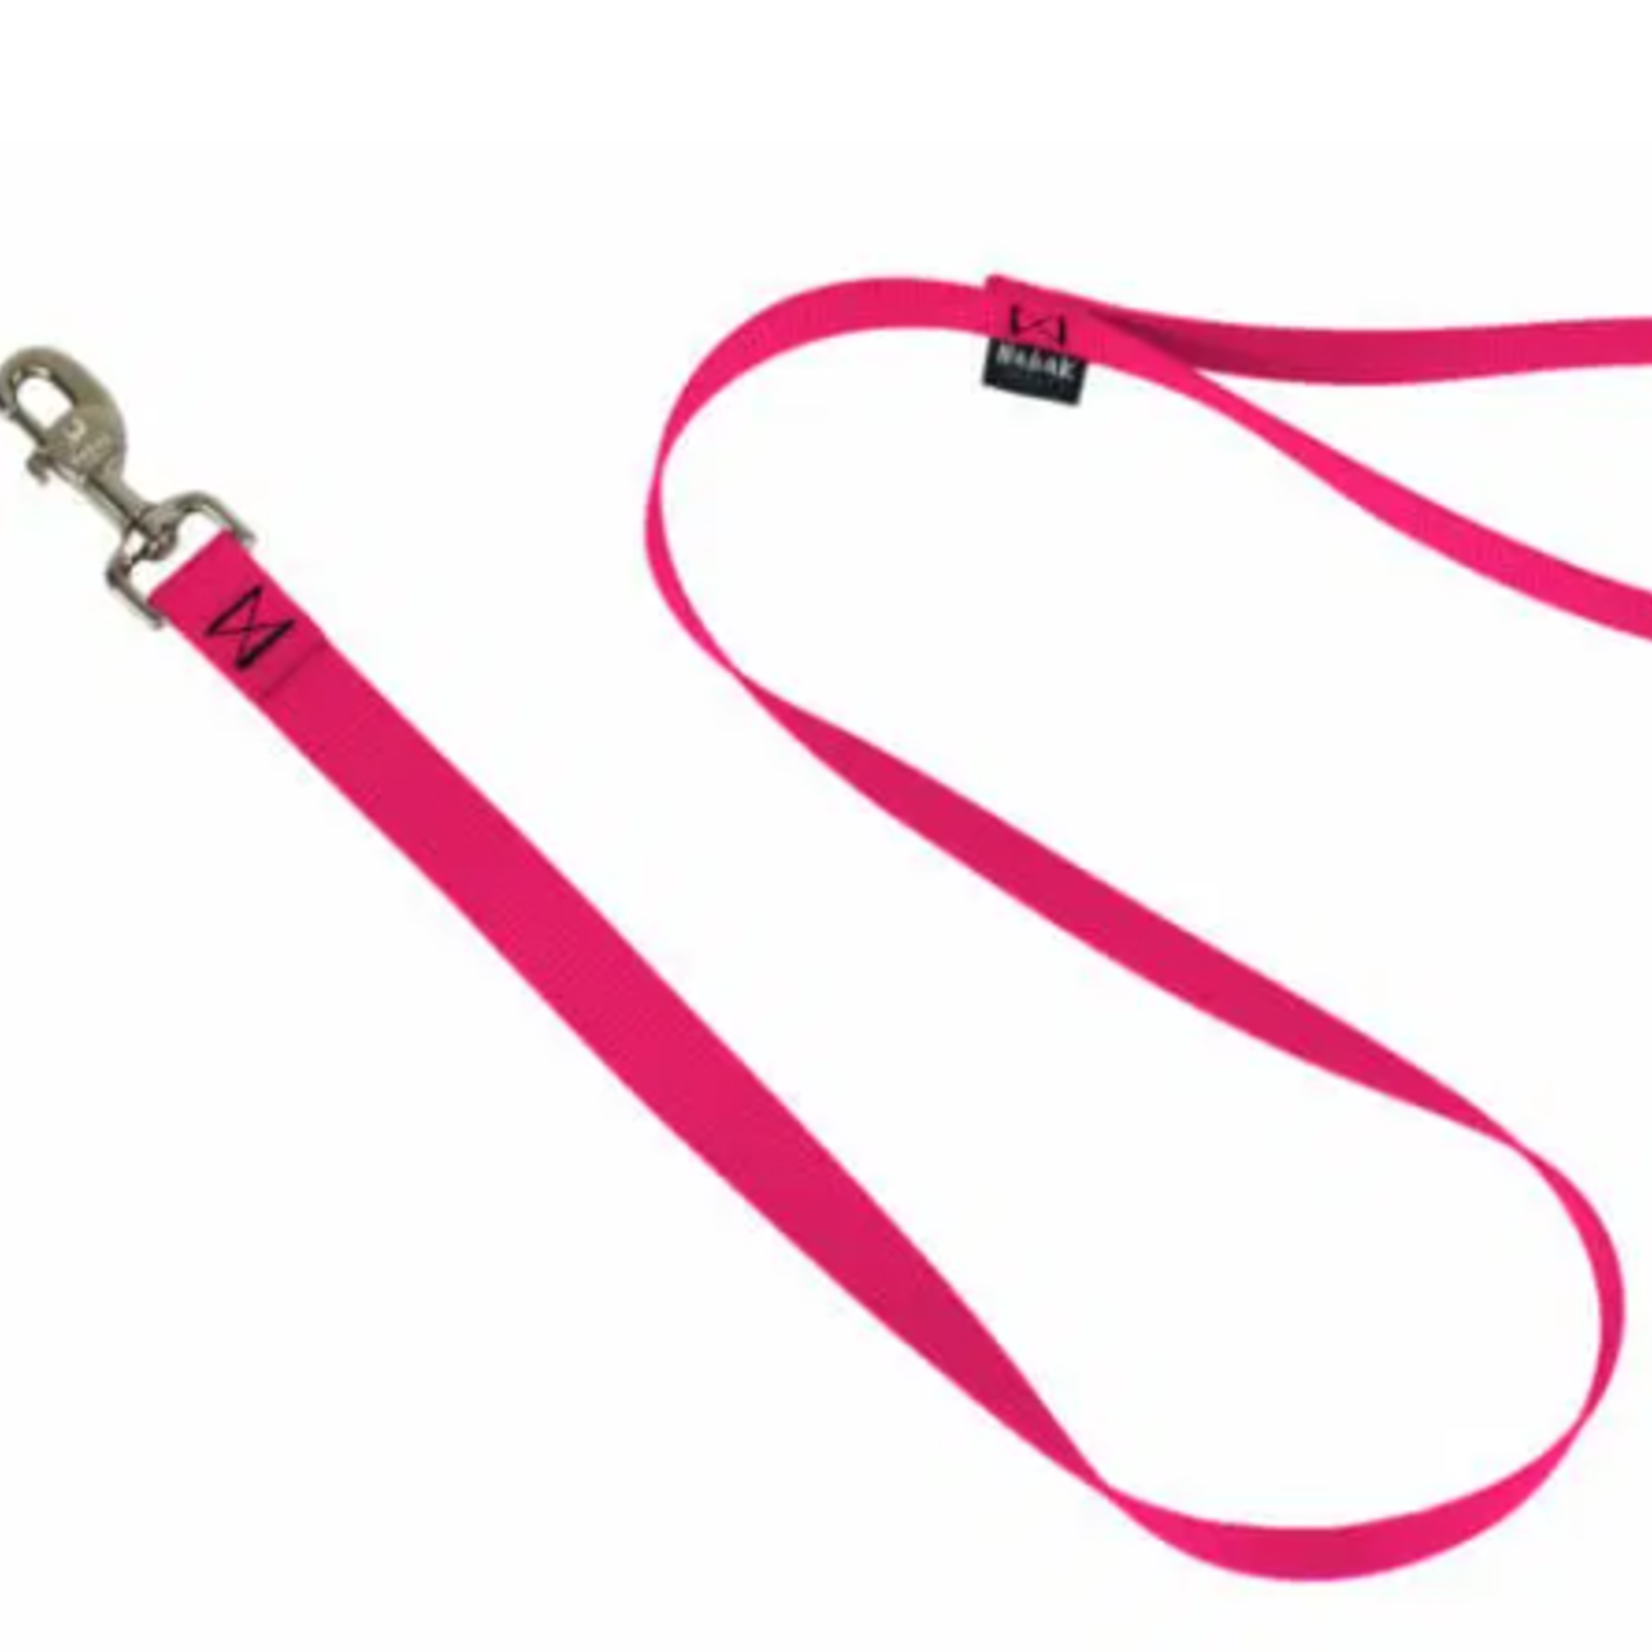 Nahak Standard 4' dog leash